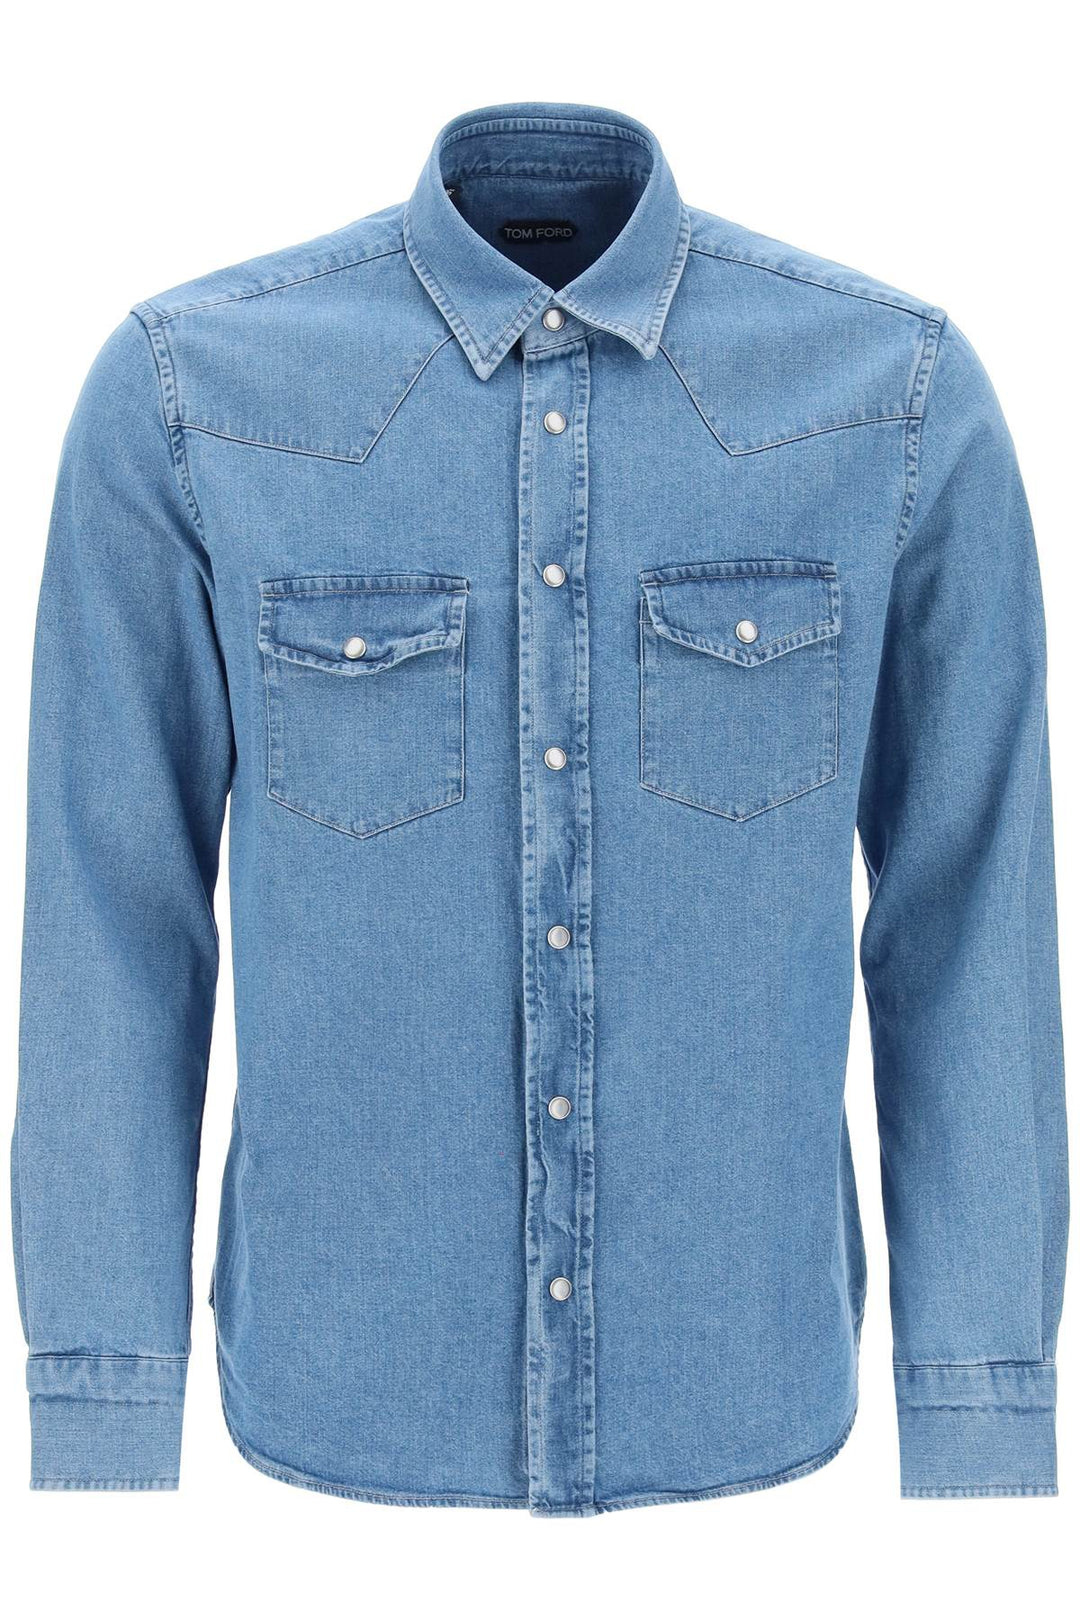 Tom Ford Denim Western Shirt For Men   Blu